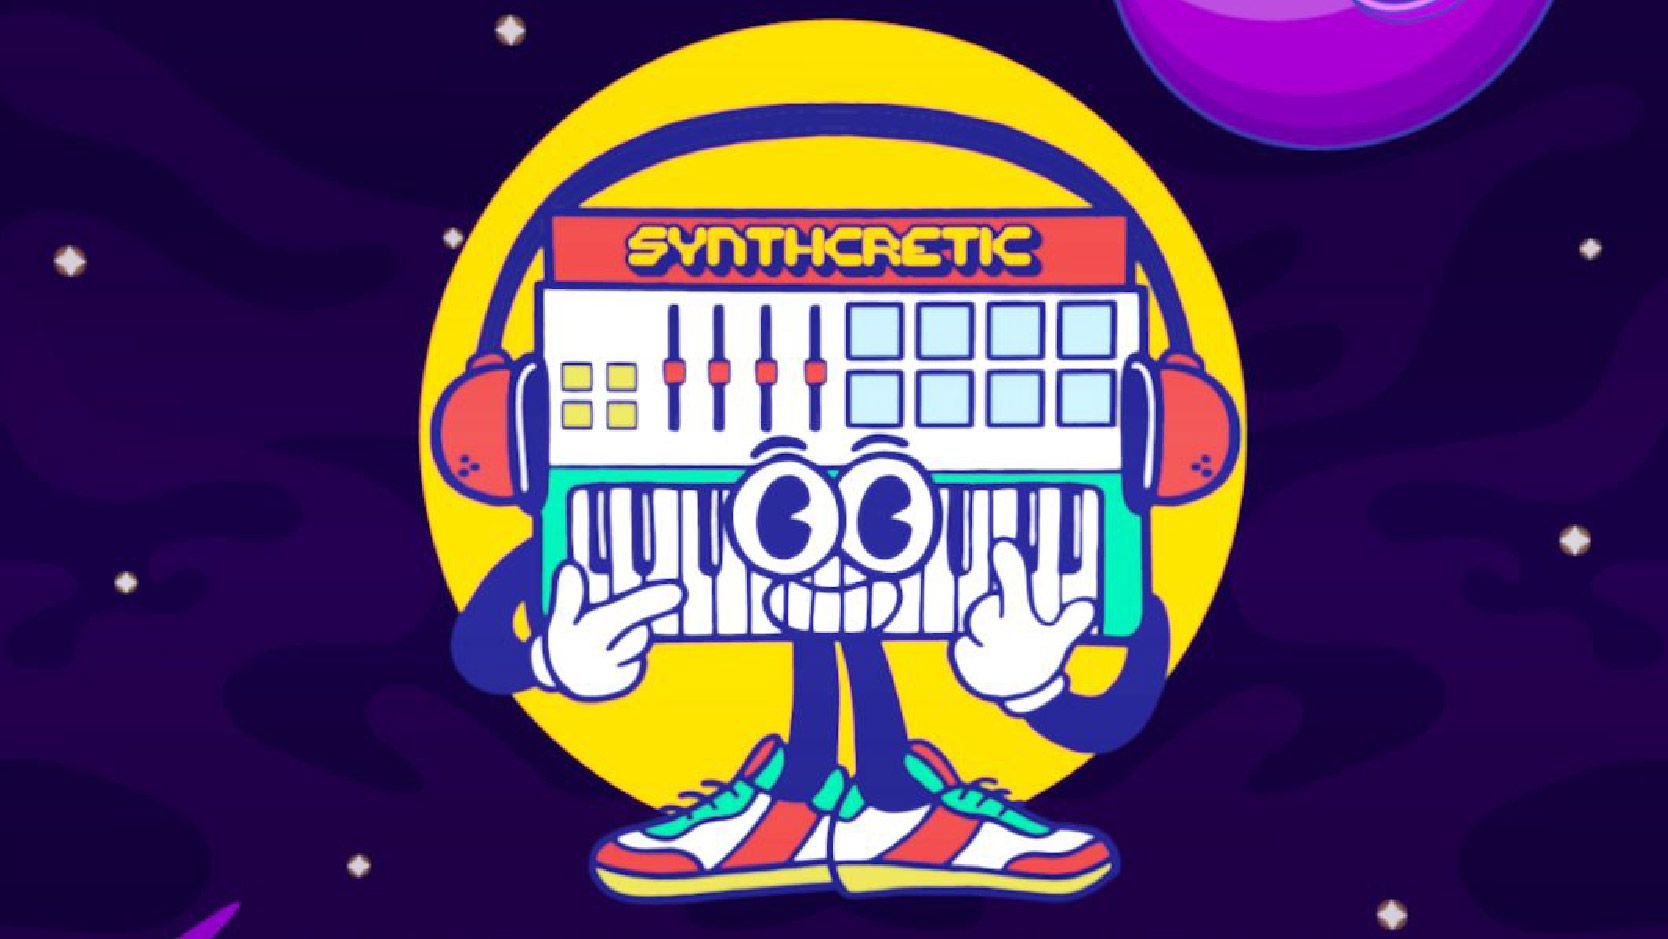 Synthcretic presents Breakthrough cover